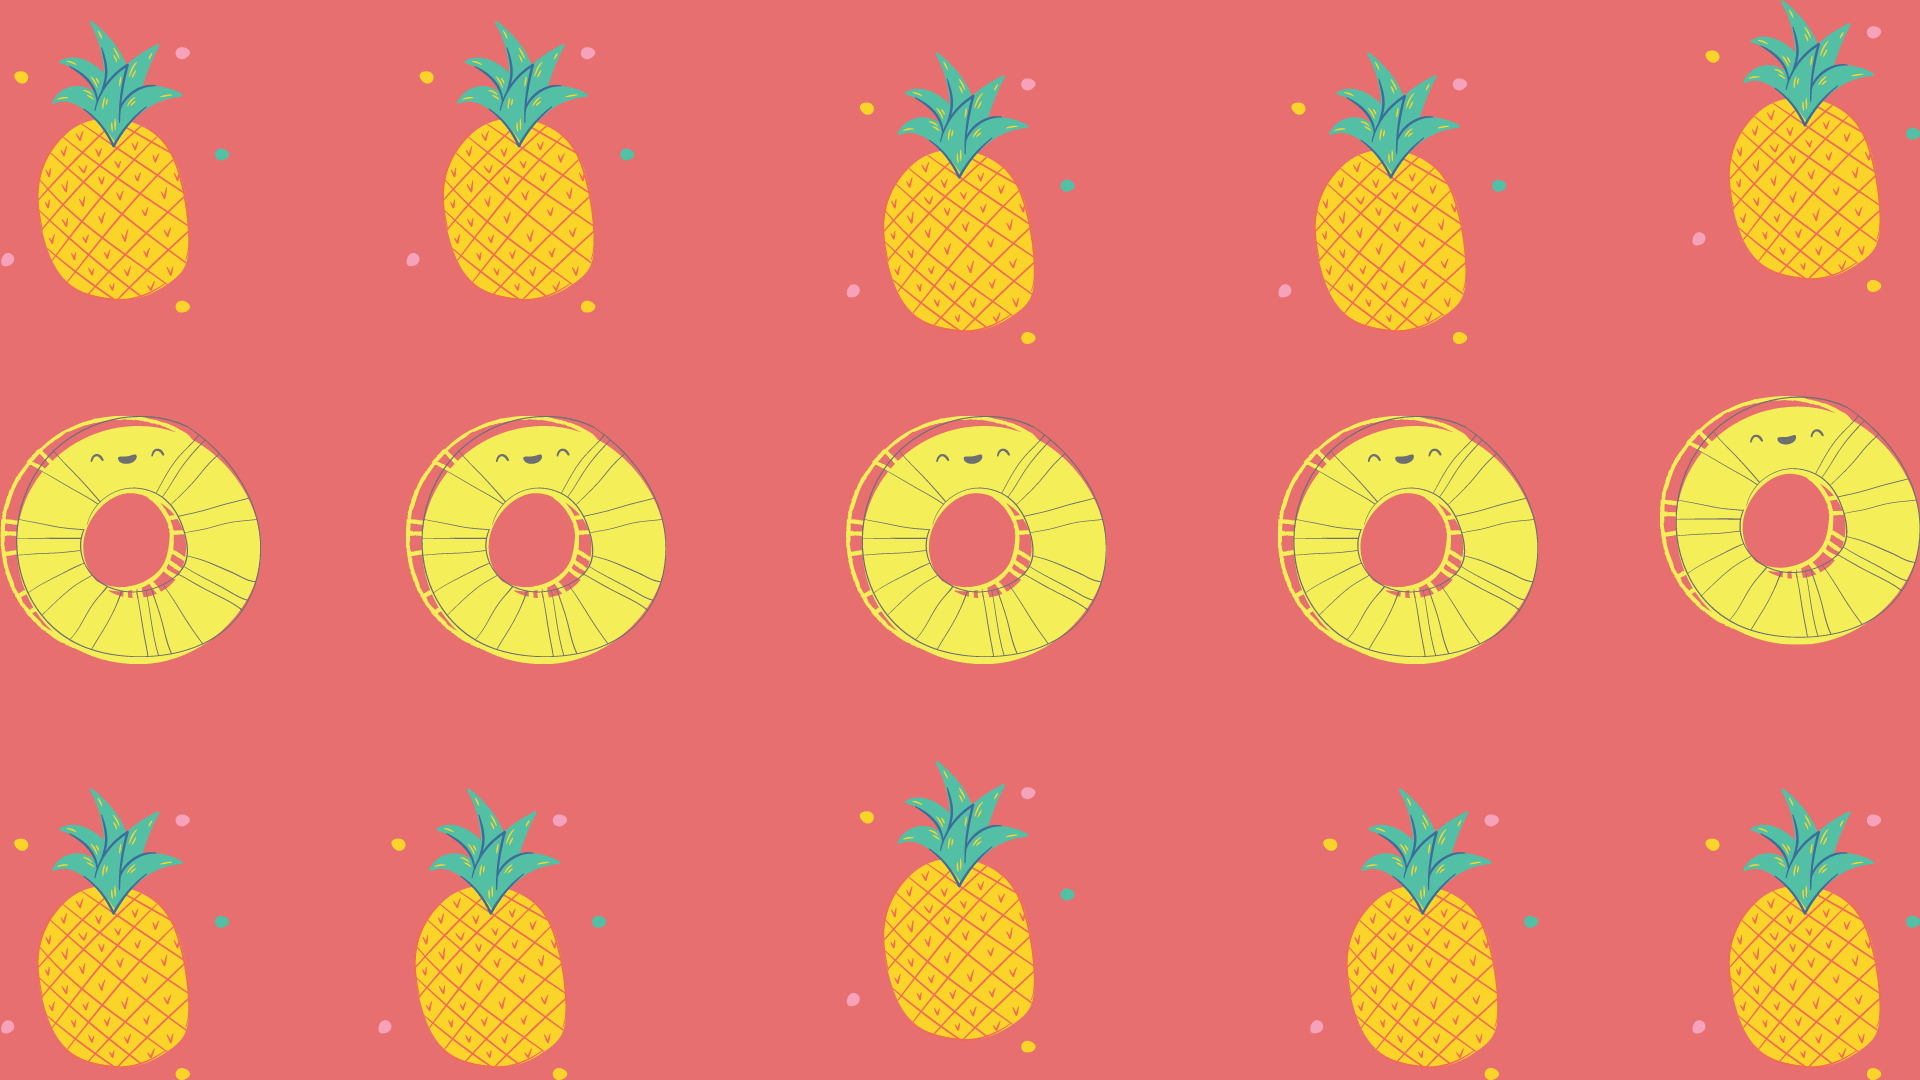 1920x1080 Cute Pineapple desktop wallpaper | Cute pineapple wallpaper, Pineapple wallpaper, Cute pineapple